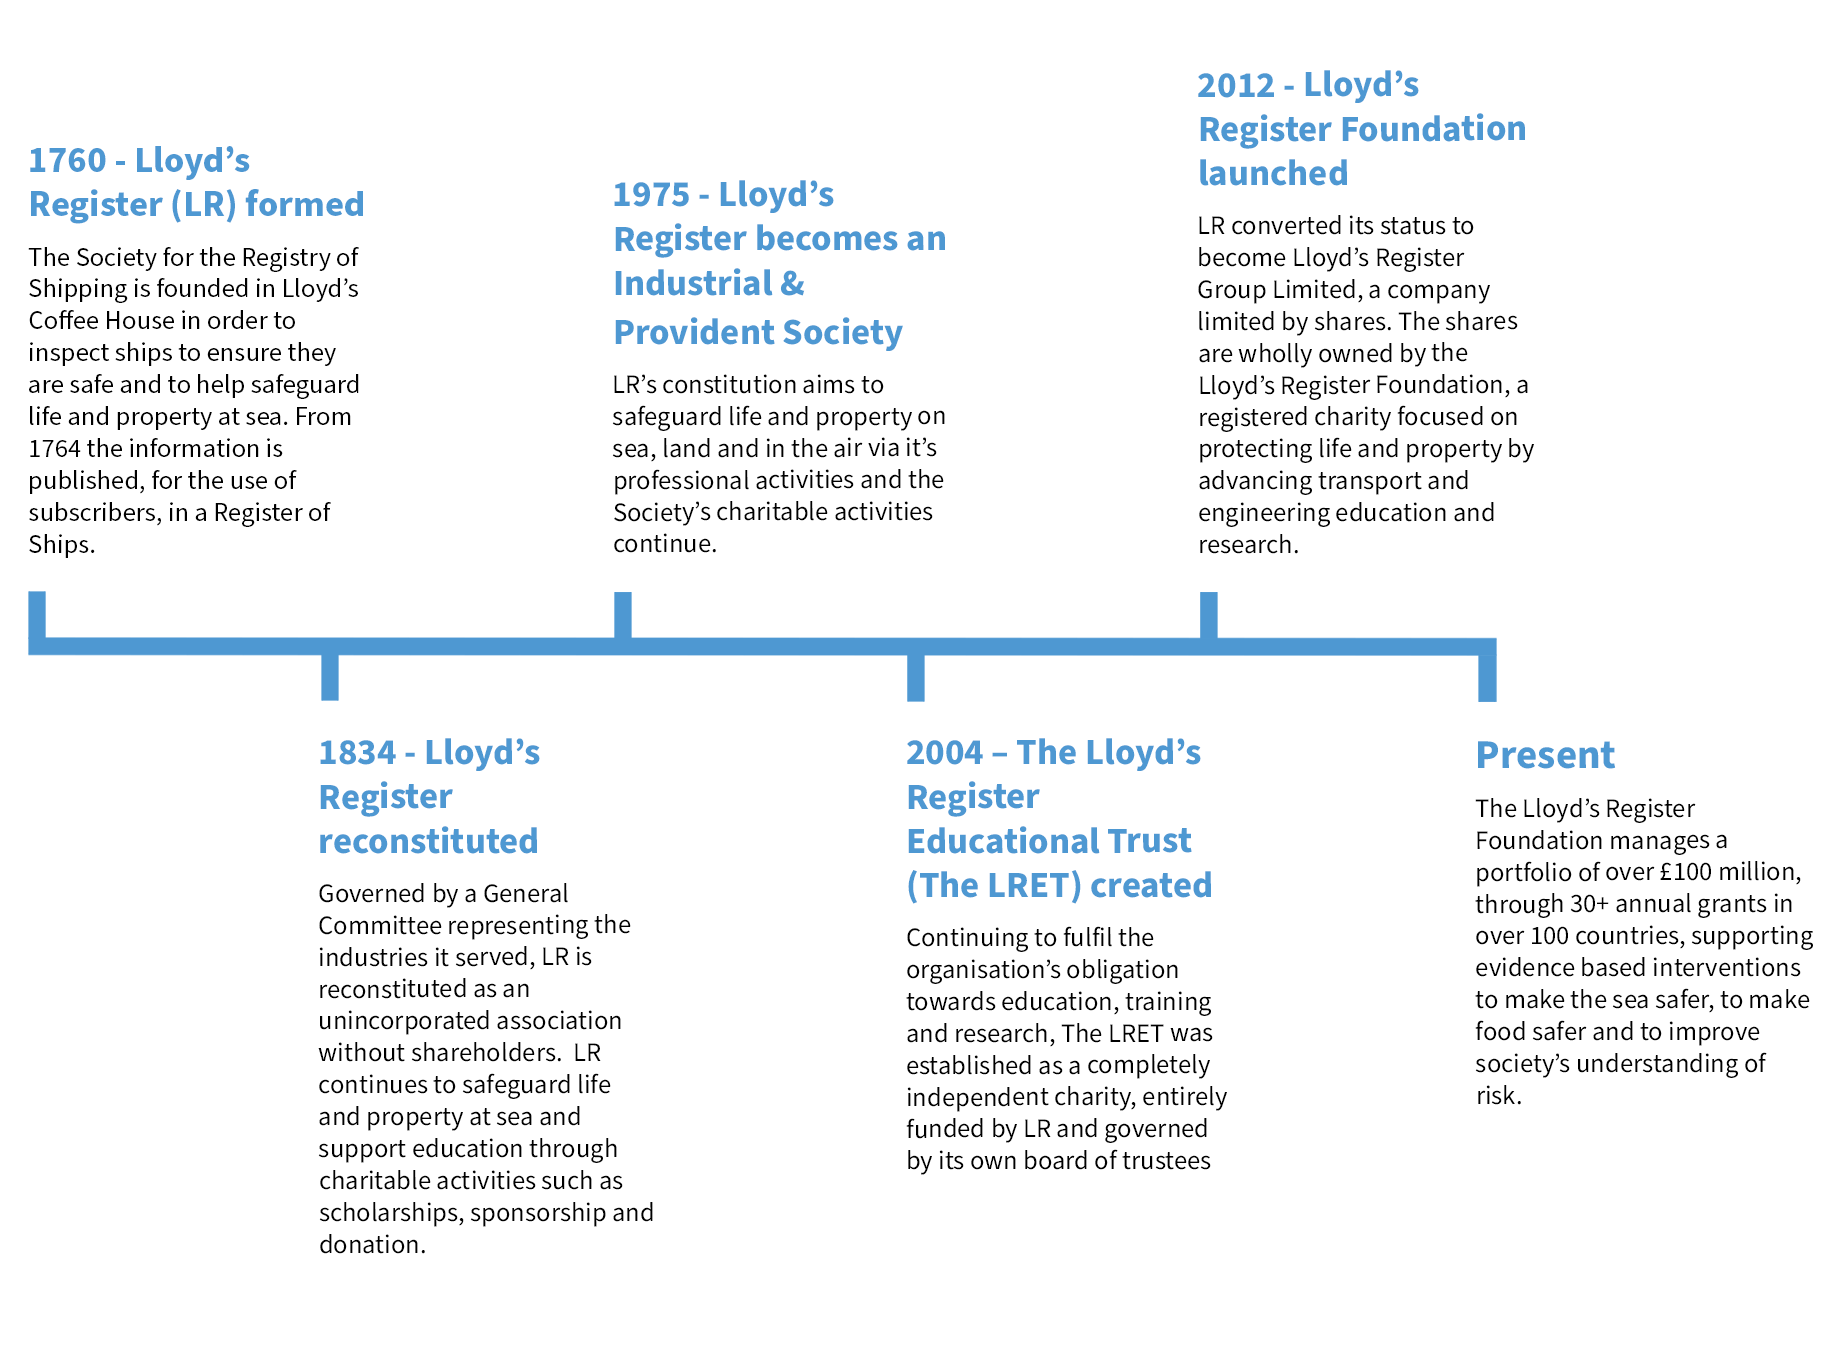 The history of Lloyd's Register Foundation